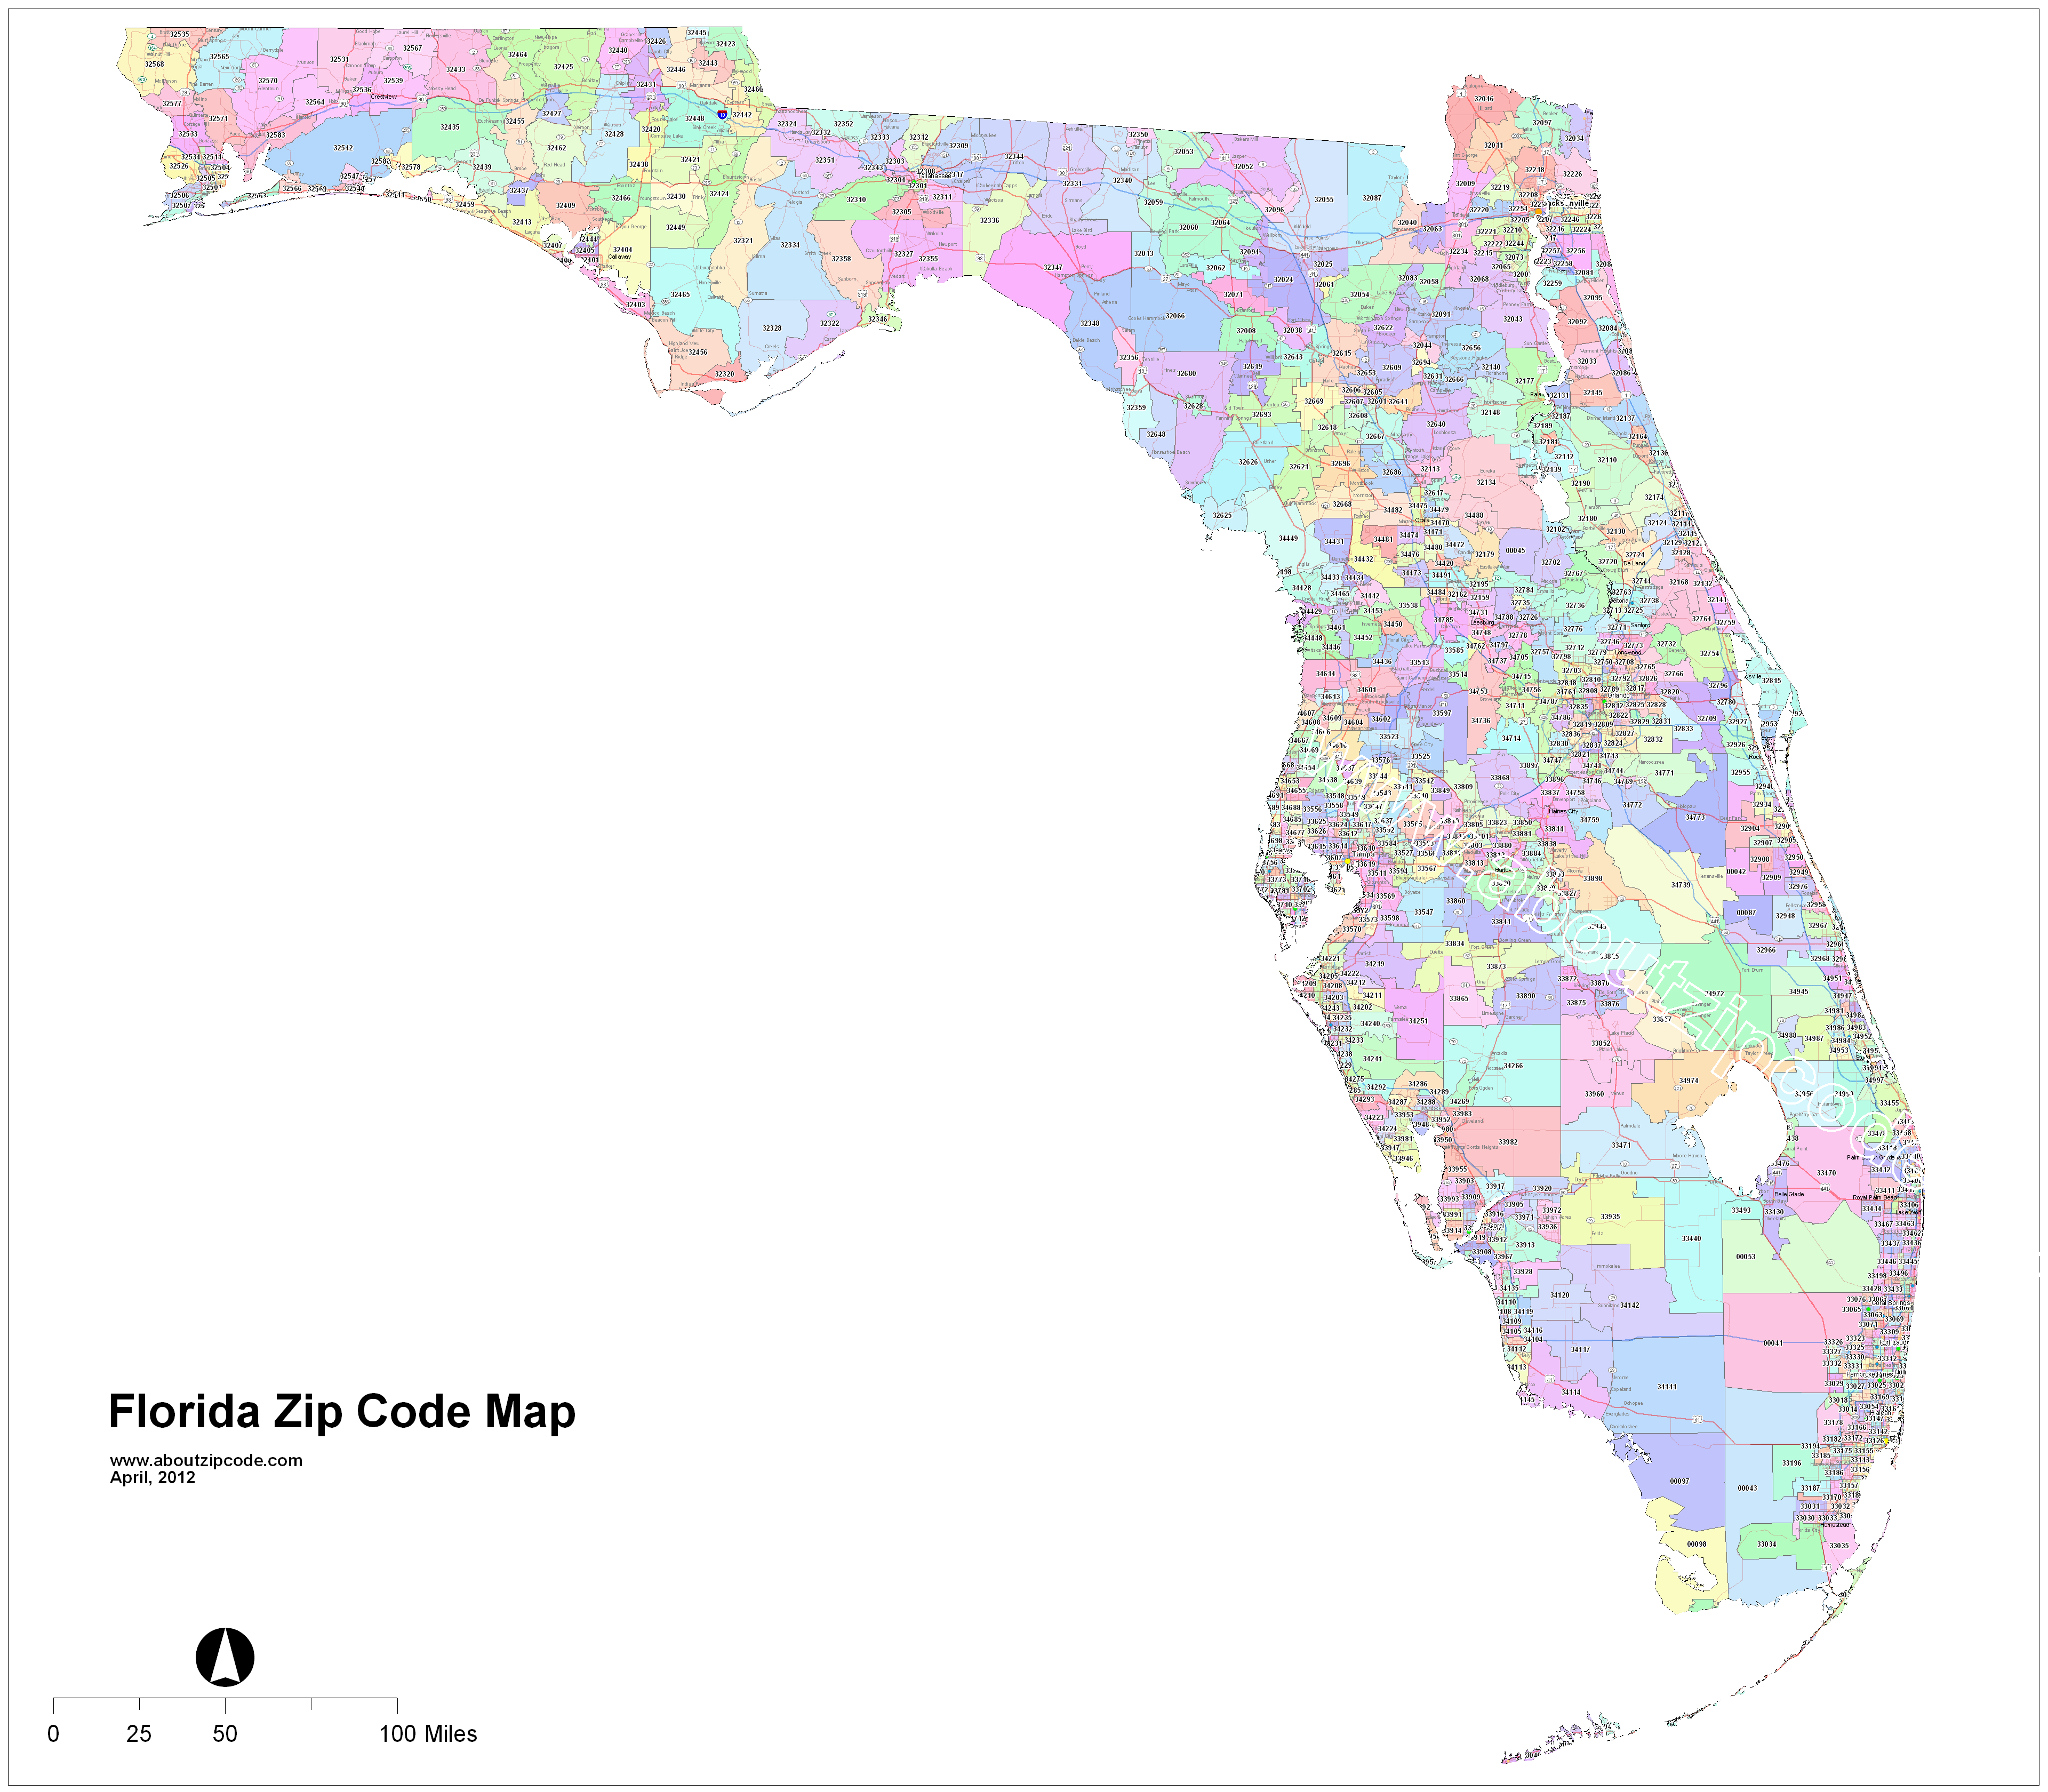 zip codes for florida map Florida Zip Code Maps Free Florida Zip Code Maps zip codes for florida map